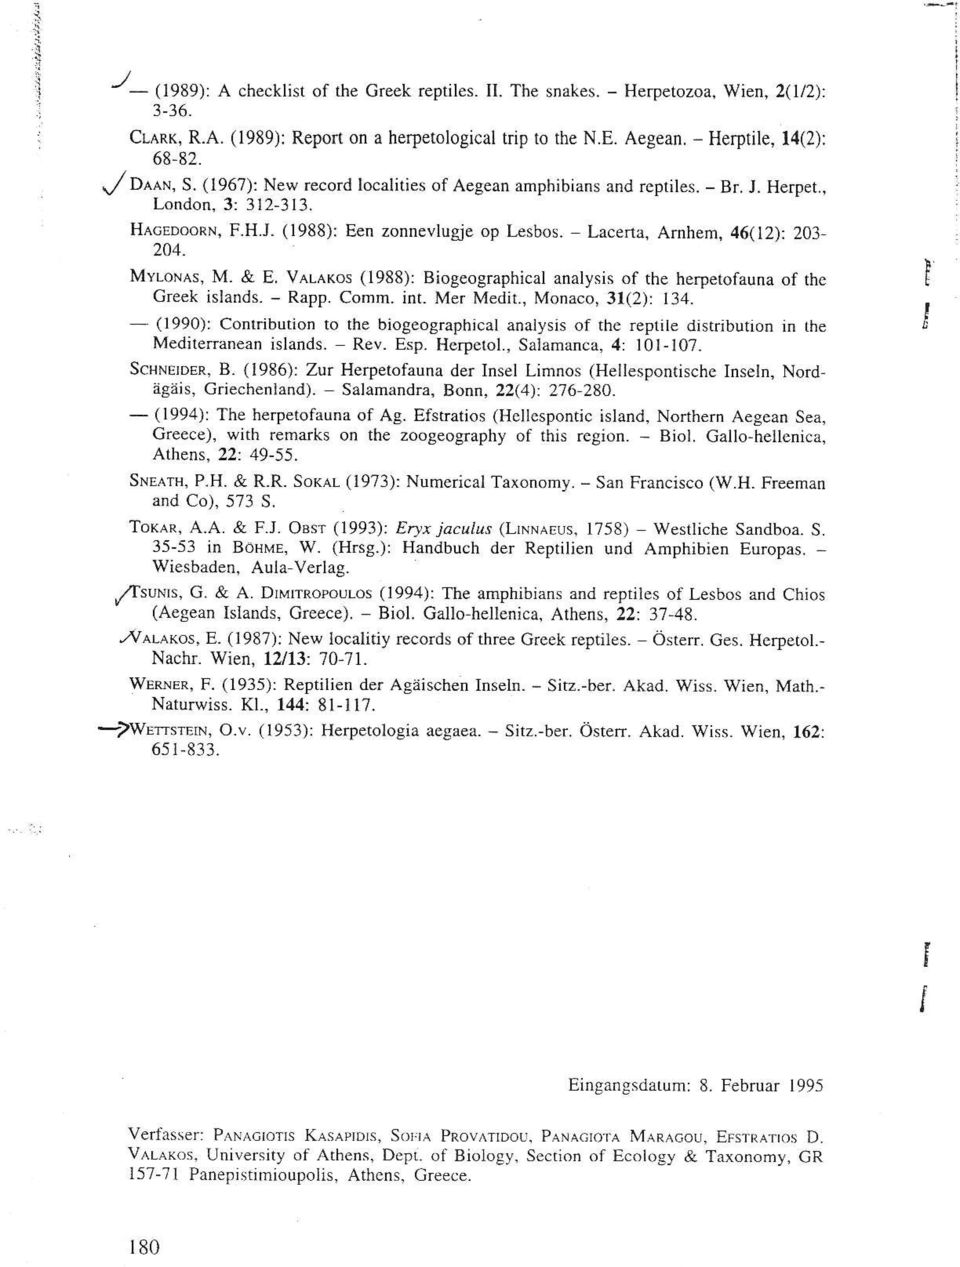 MyLoNAs, M. & E. Var-eros (1988): Biogeographical analysis of rhe herperofauna rhe Greek islands- - Rapp. Comm. int. Mer Medir., Monaco,31(2): I34.